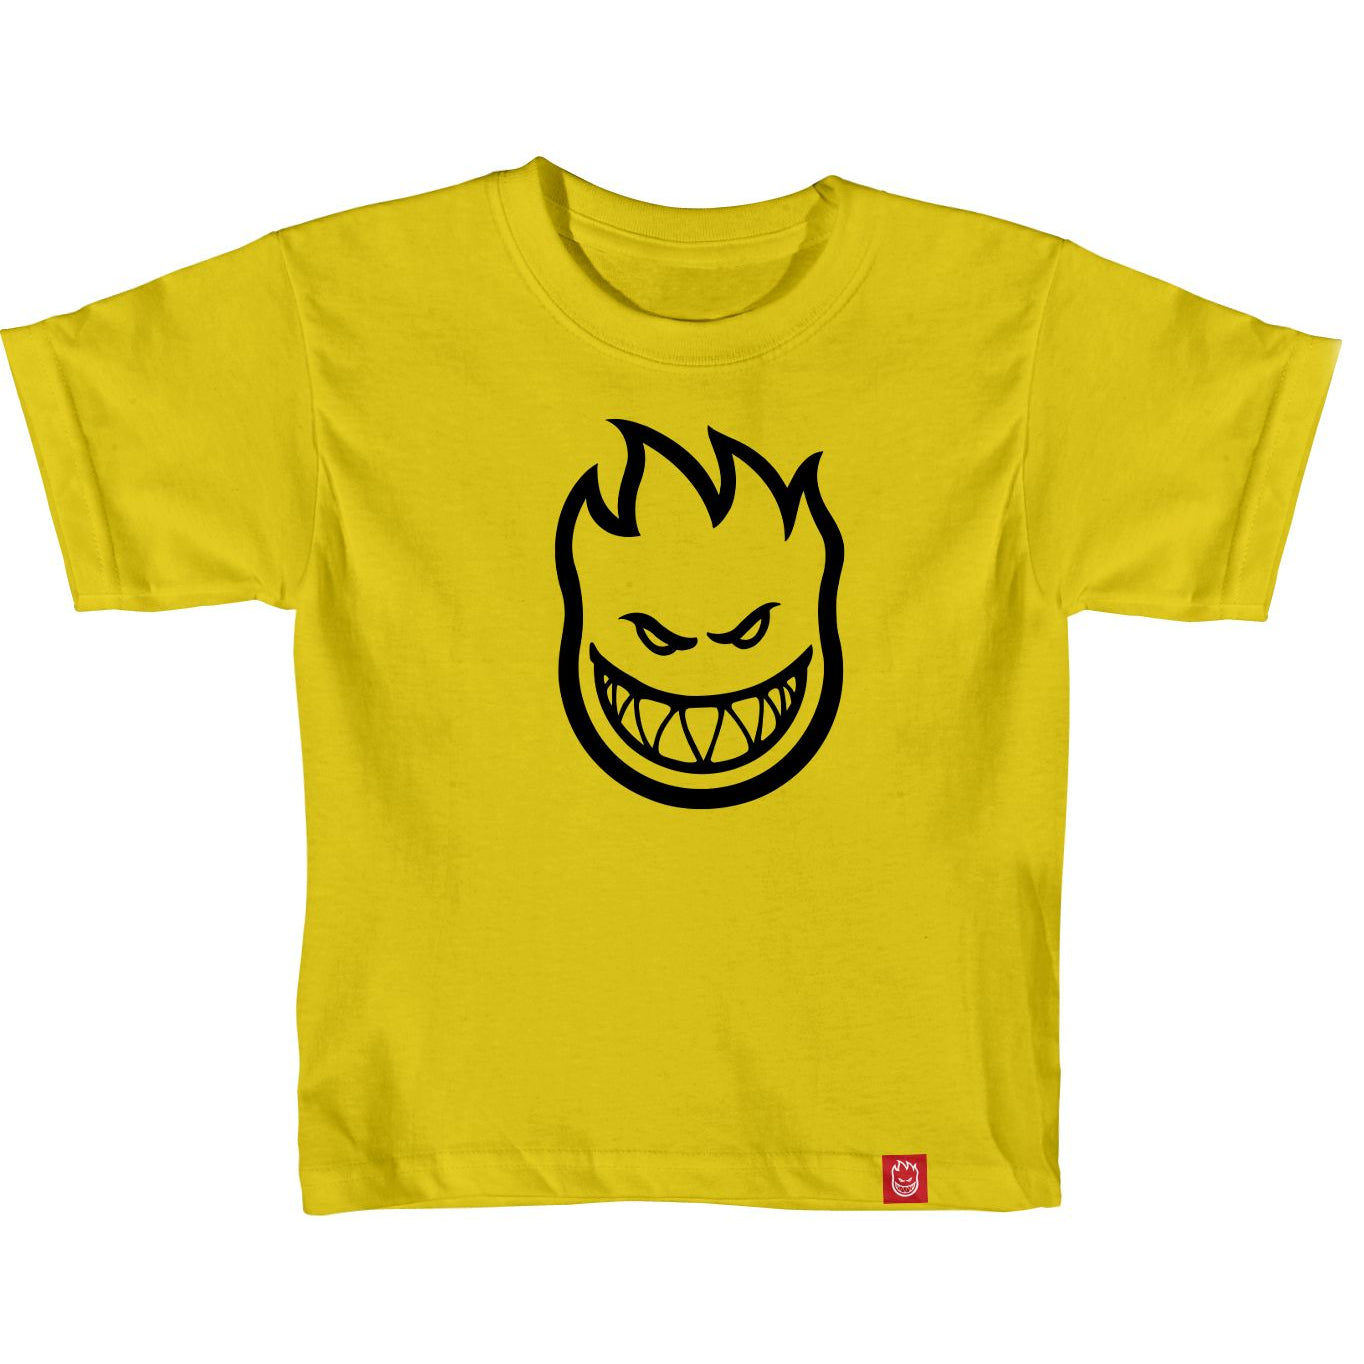 Gold/Black Toddler Bighead Spitfire T-shirt